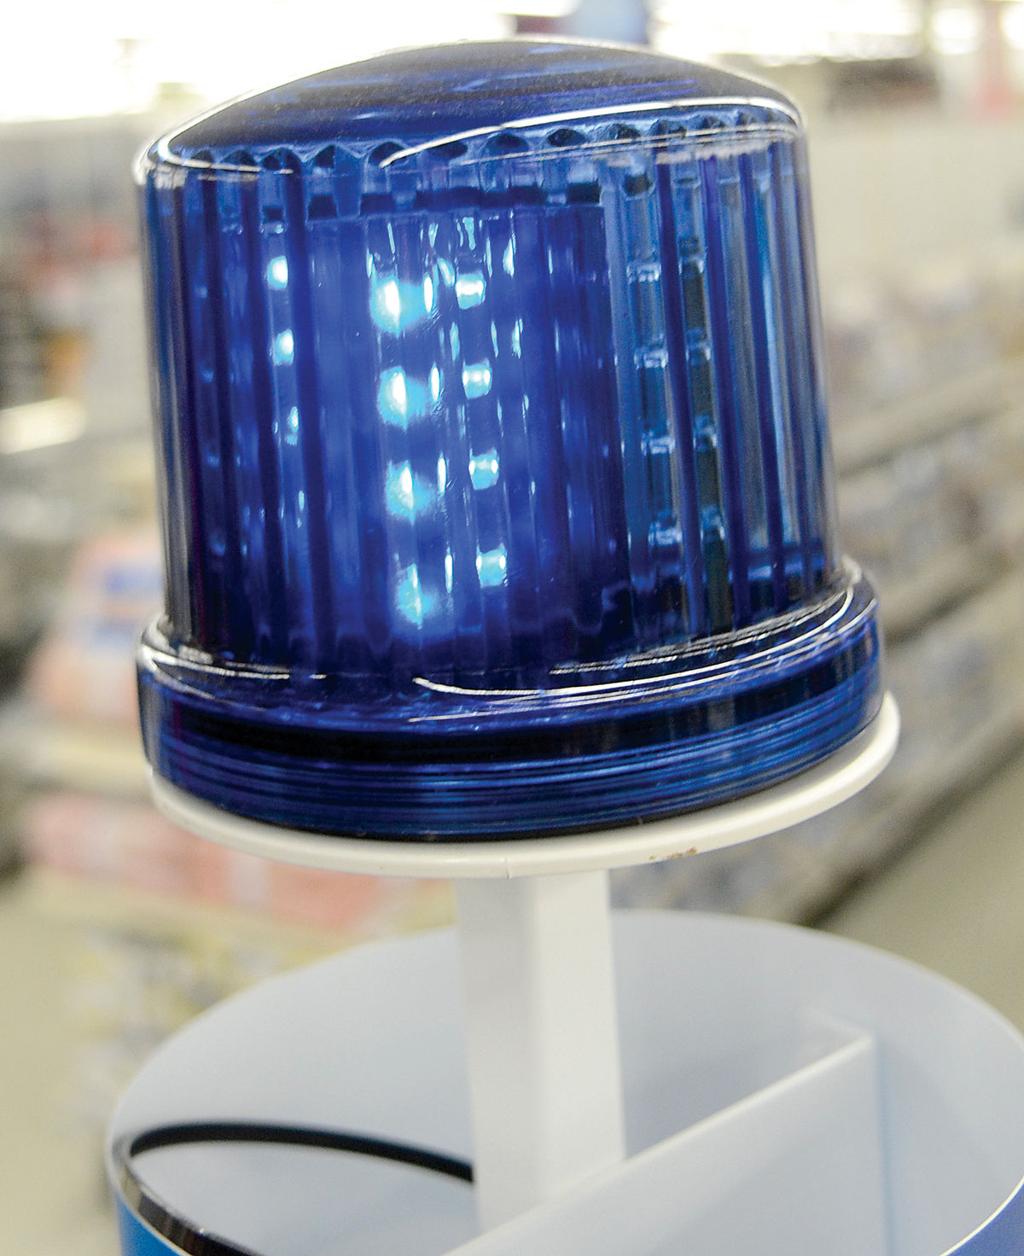 Popular Bluelight Specials Return To Kmart News Dailyitem Com